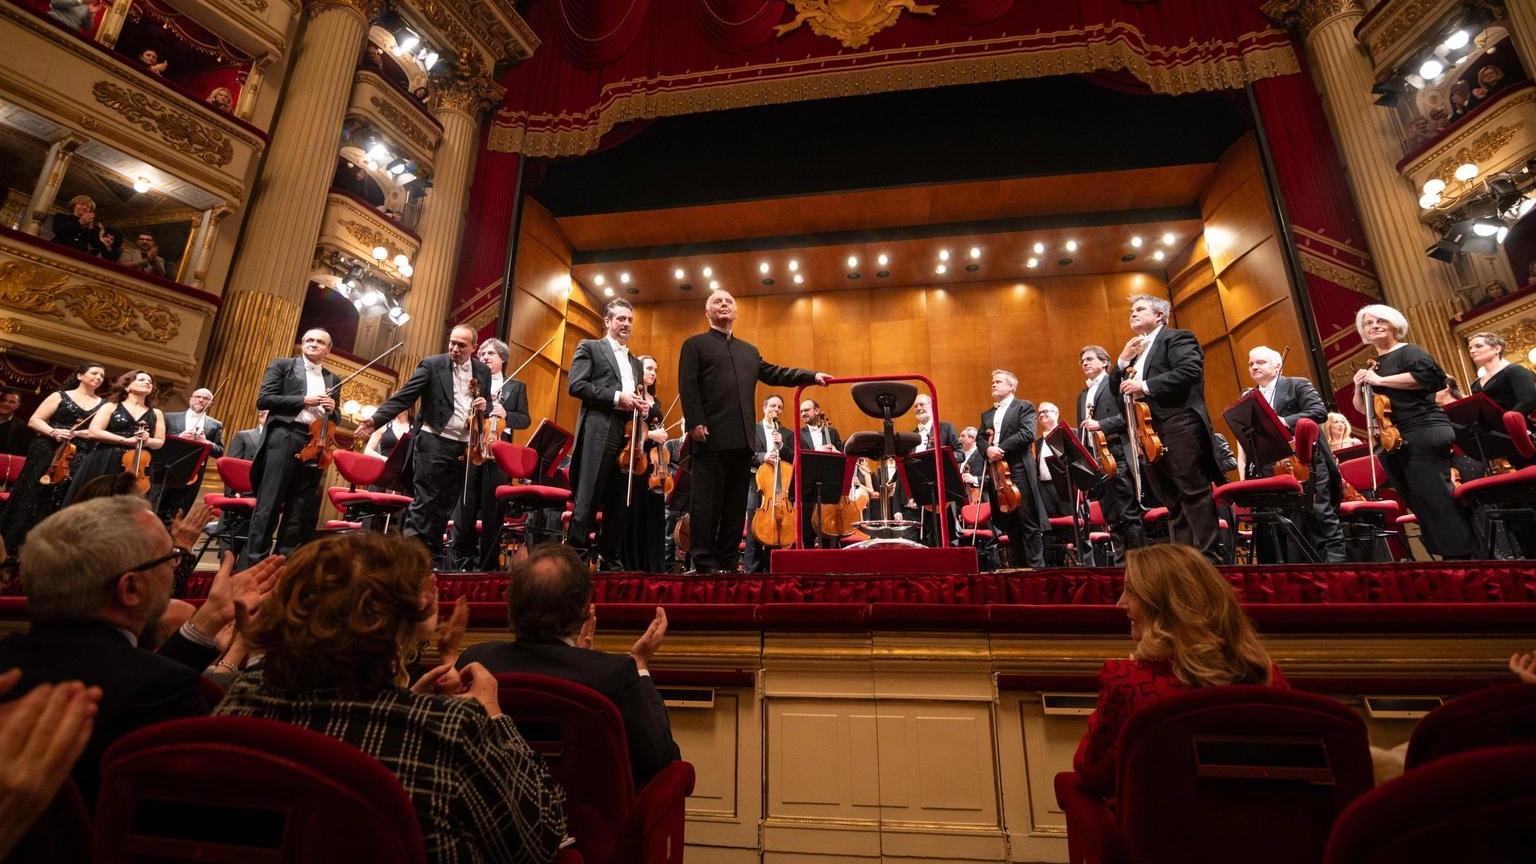 Standing ovation alla Scala per Barenboim, 'bentornato maestro'